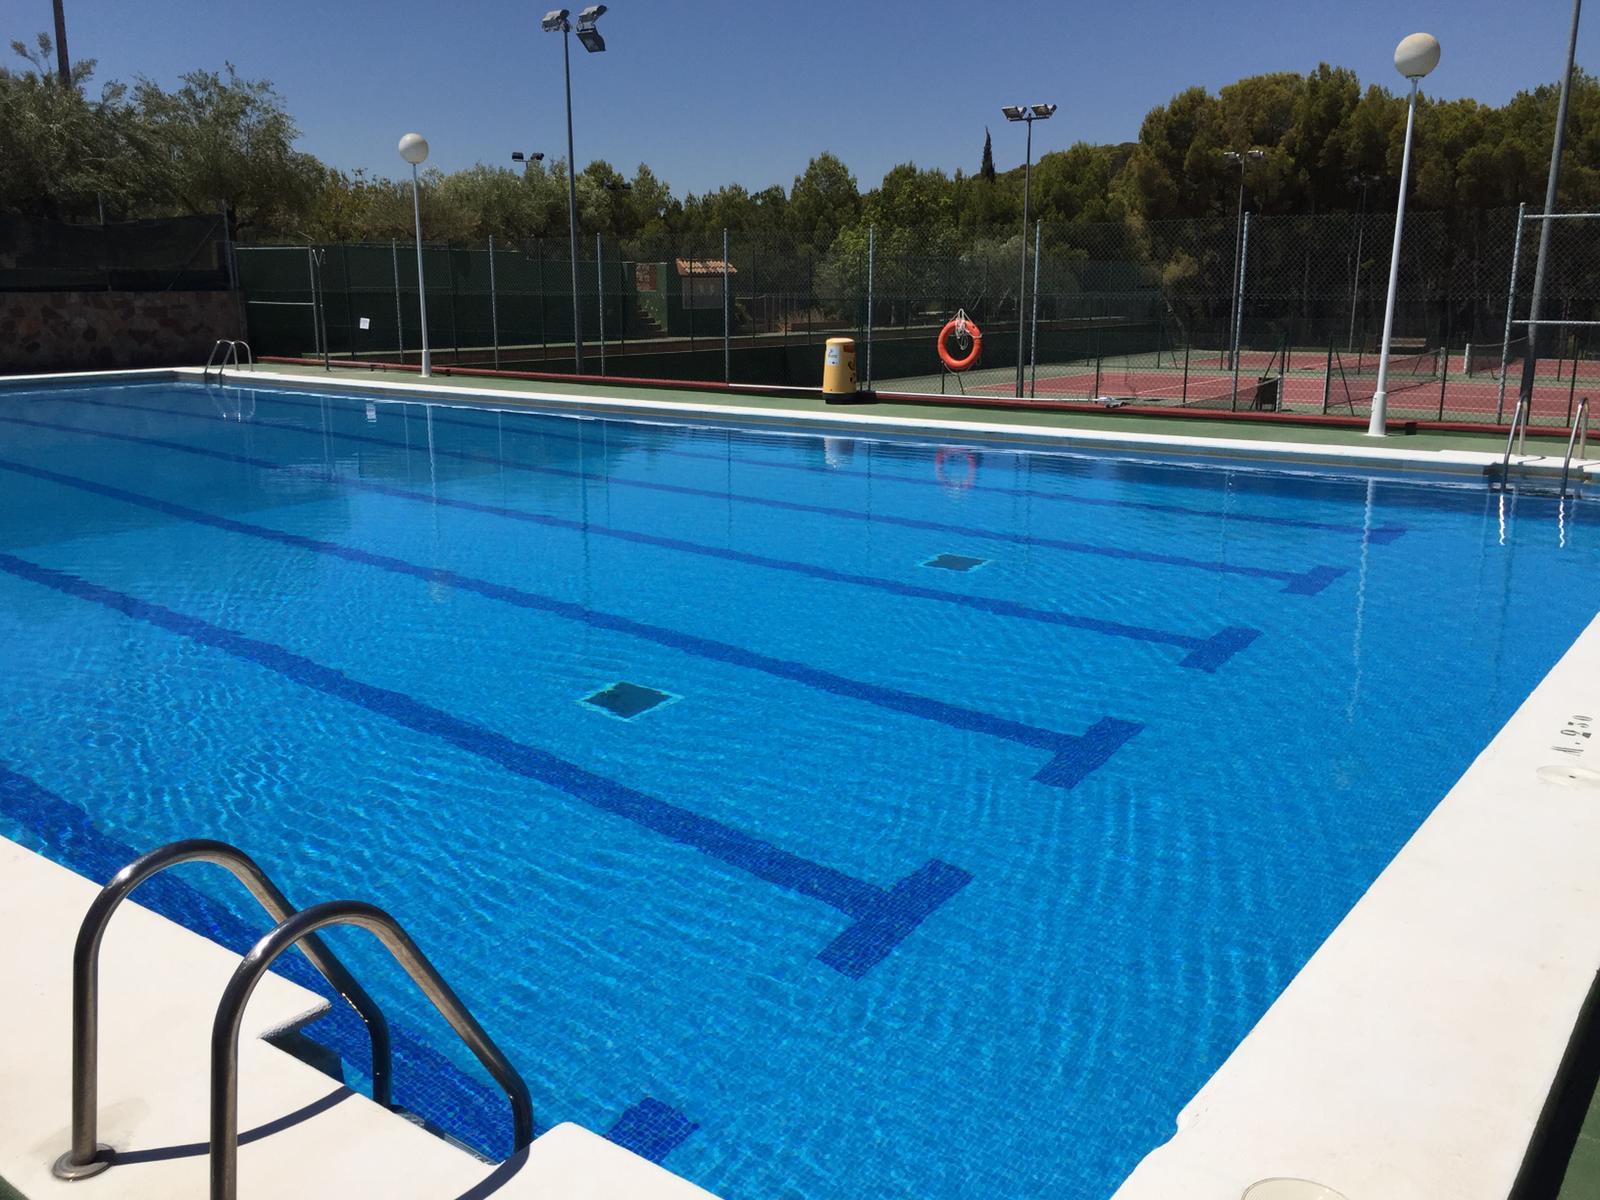 La piscina municipal de Almenara abrirá al baño libre a partir del 23 de junio